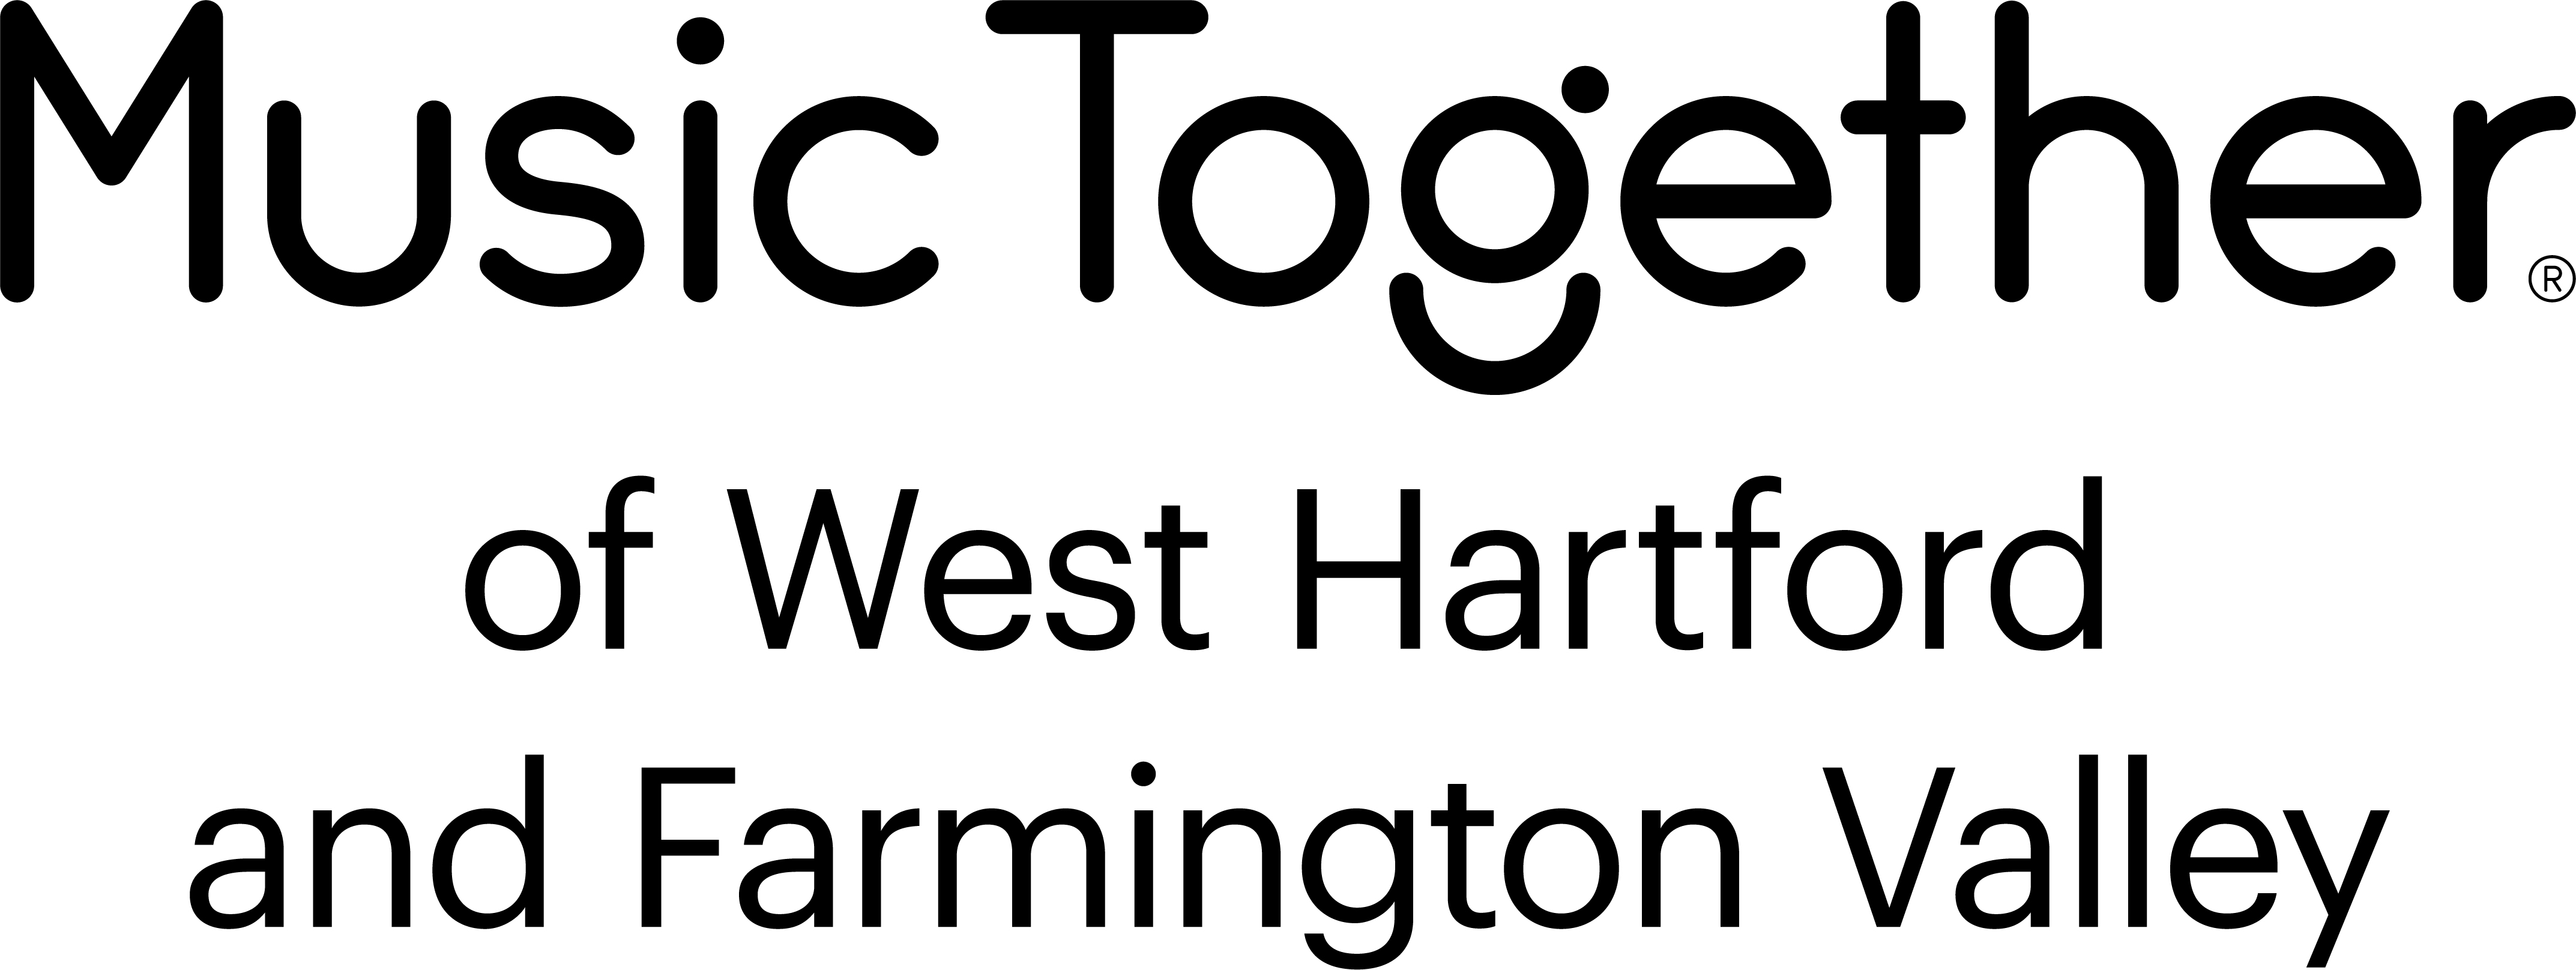 Music together logo